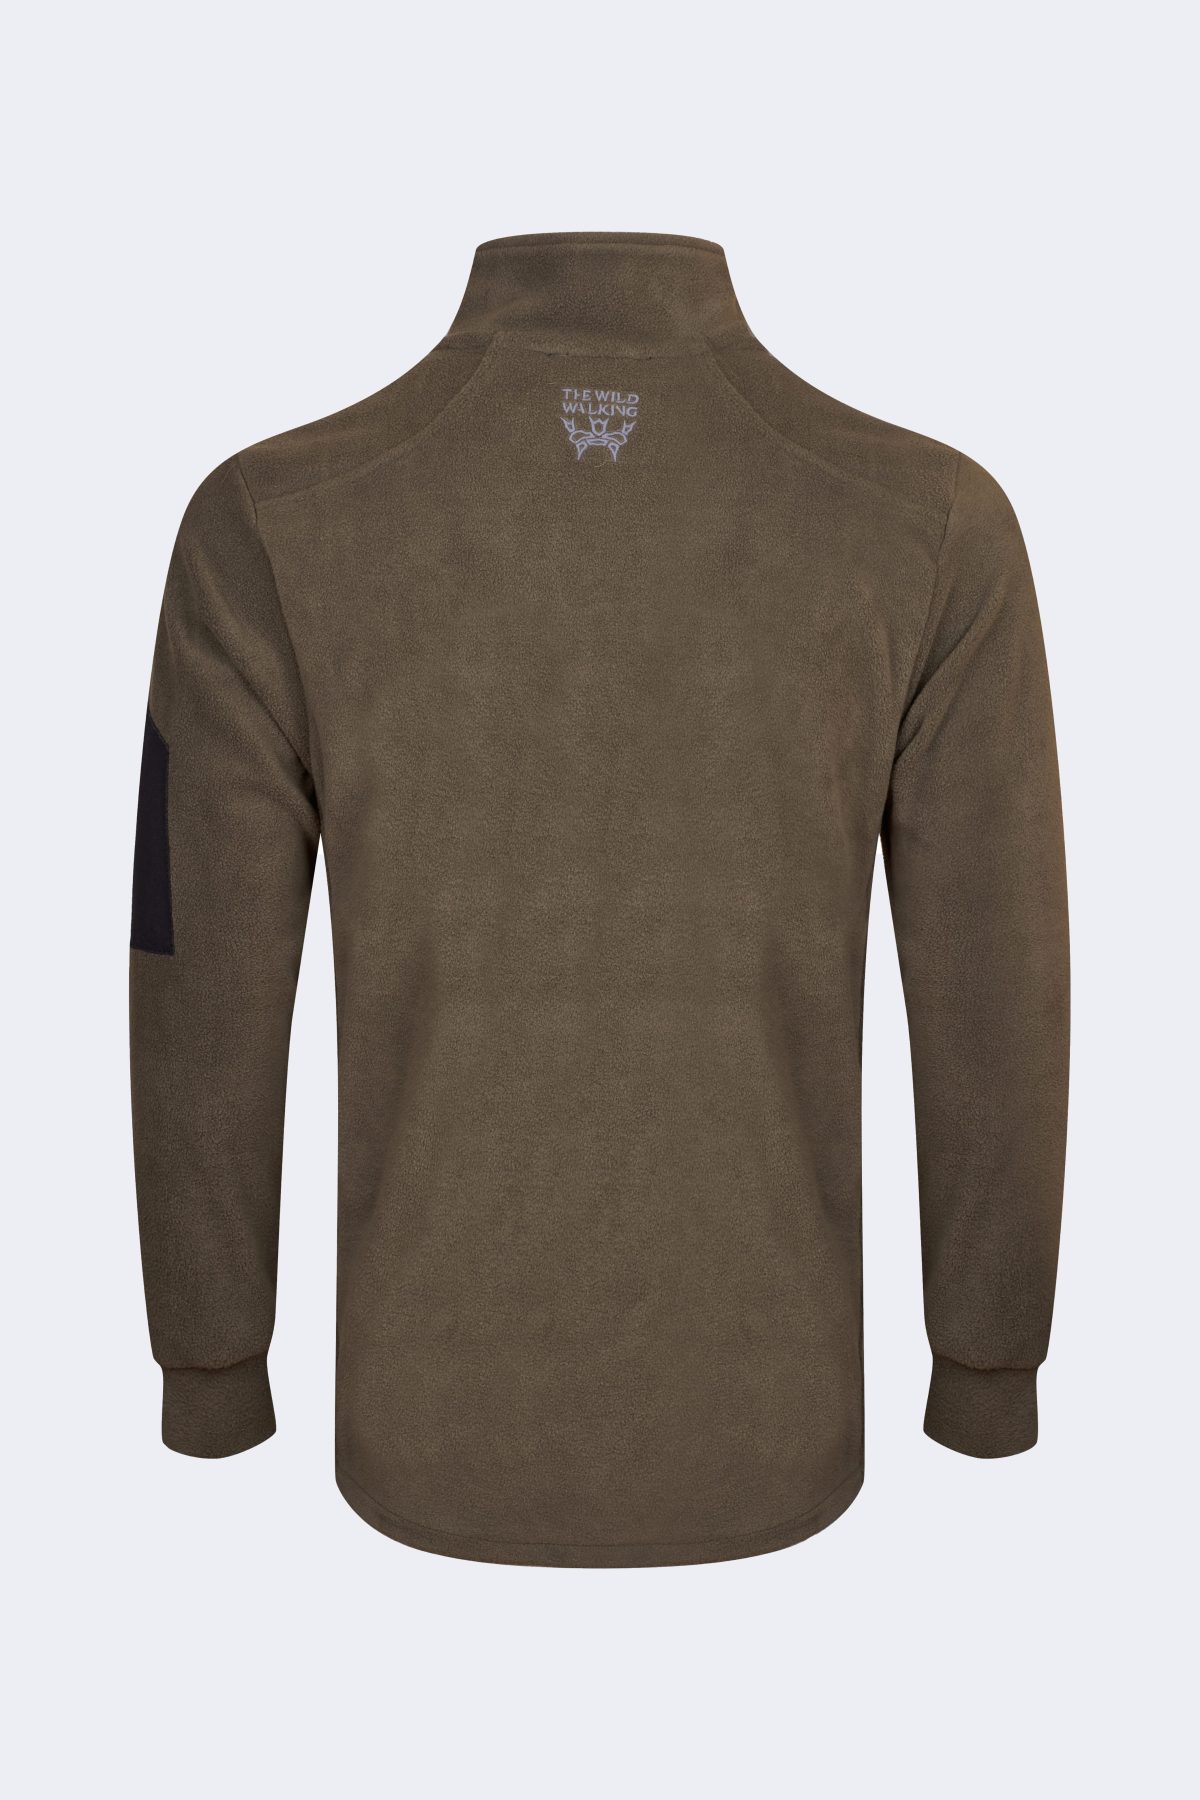 Stylish Fleece with Embroidered Logo and Sleeve Pocket – Khaki-3450